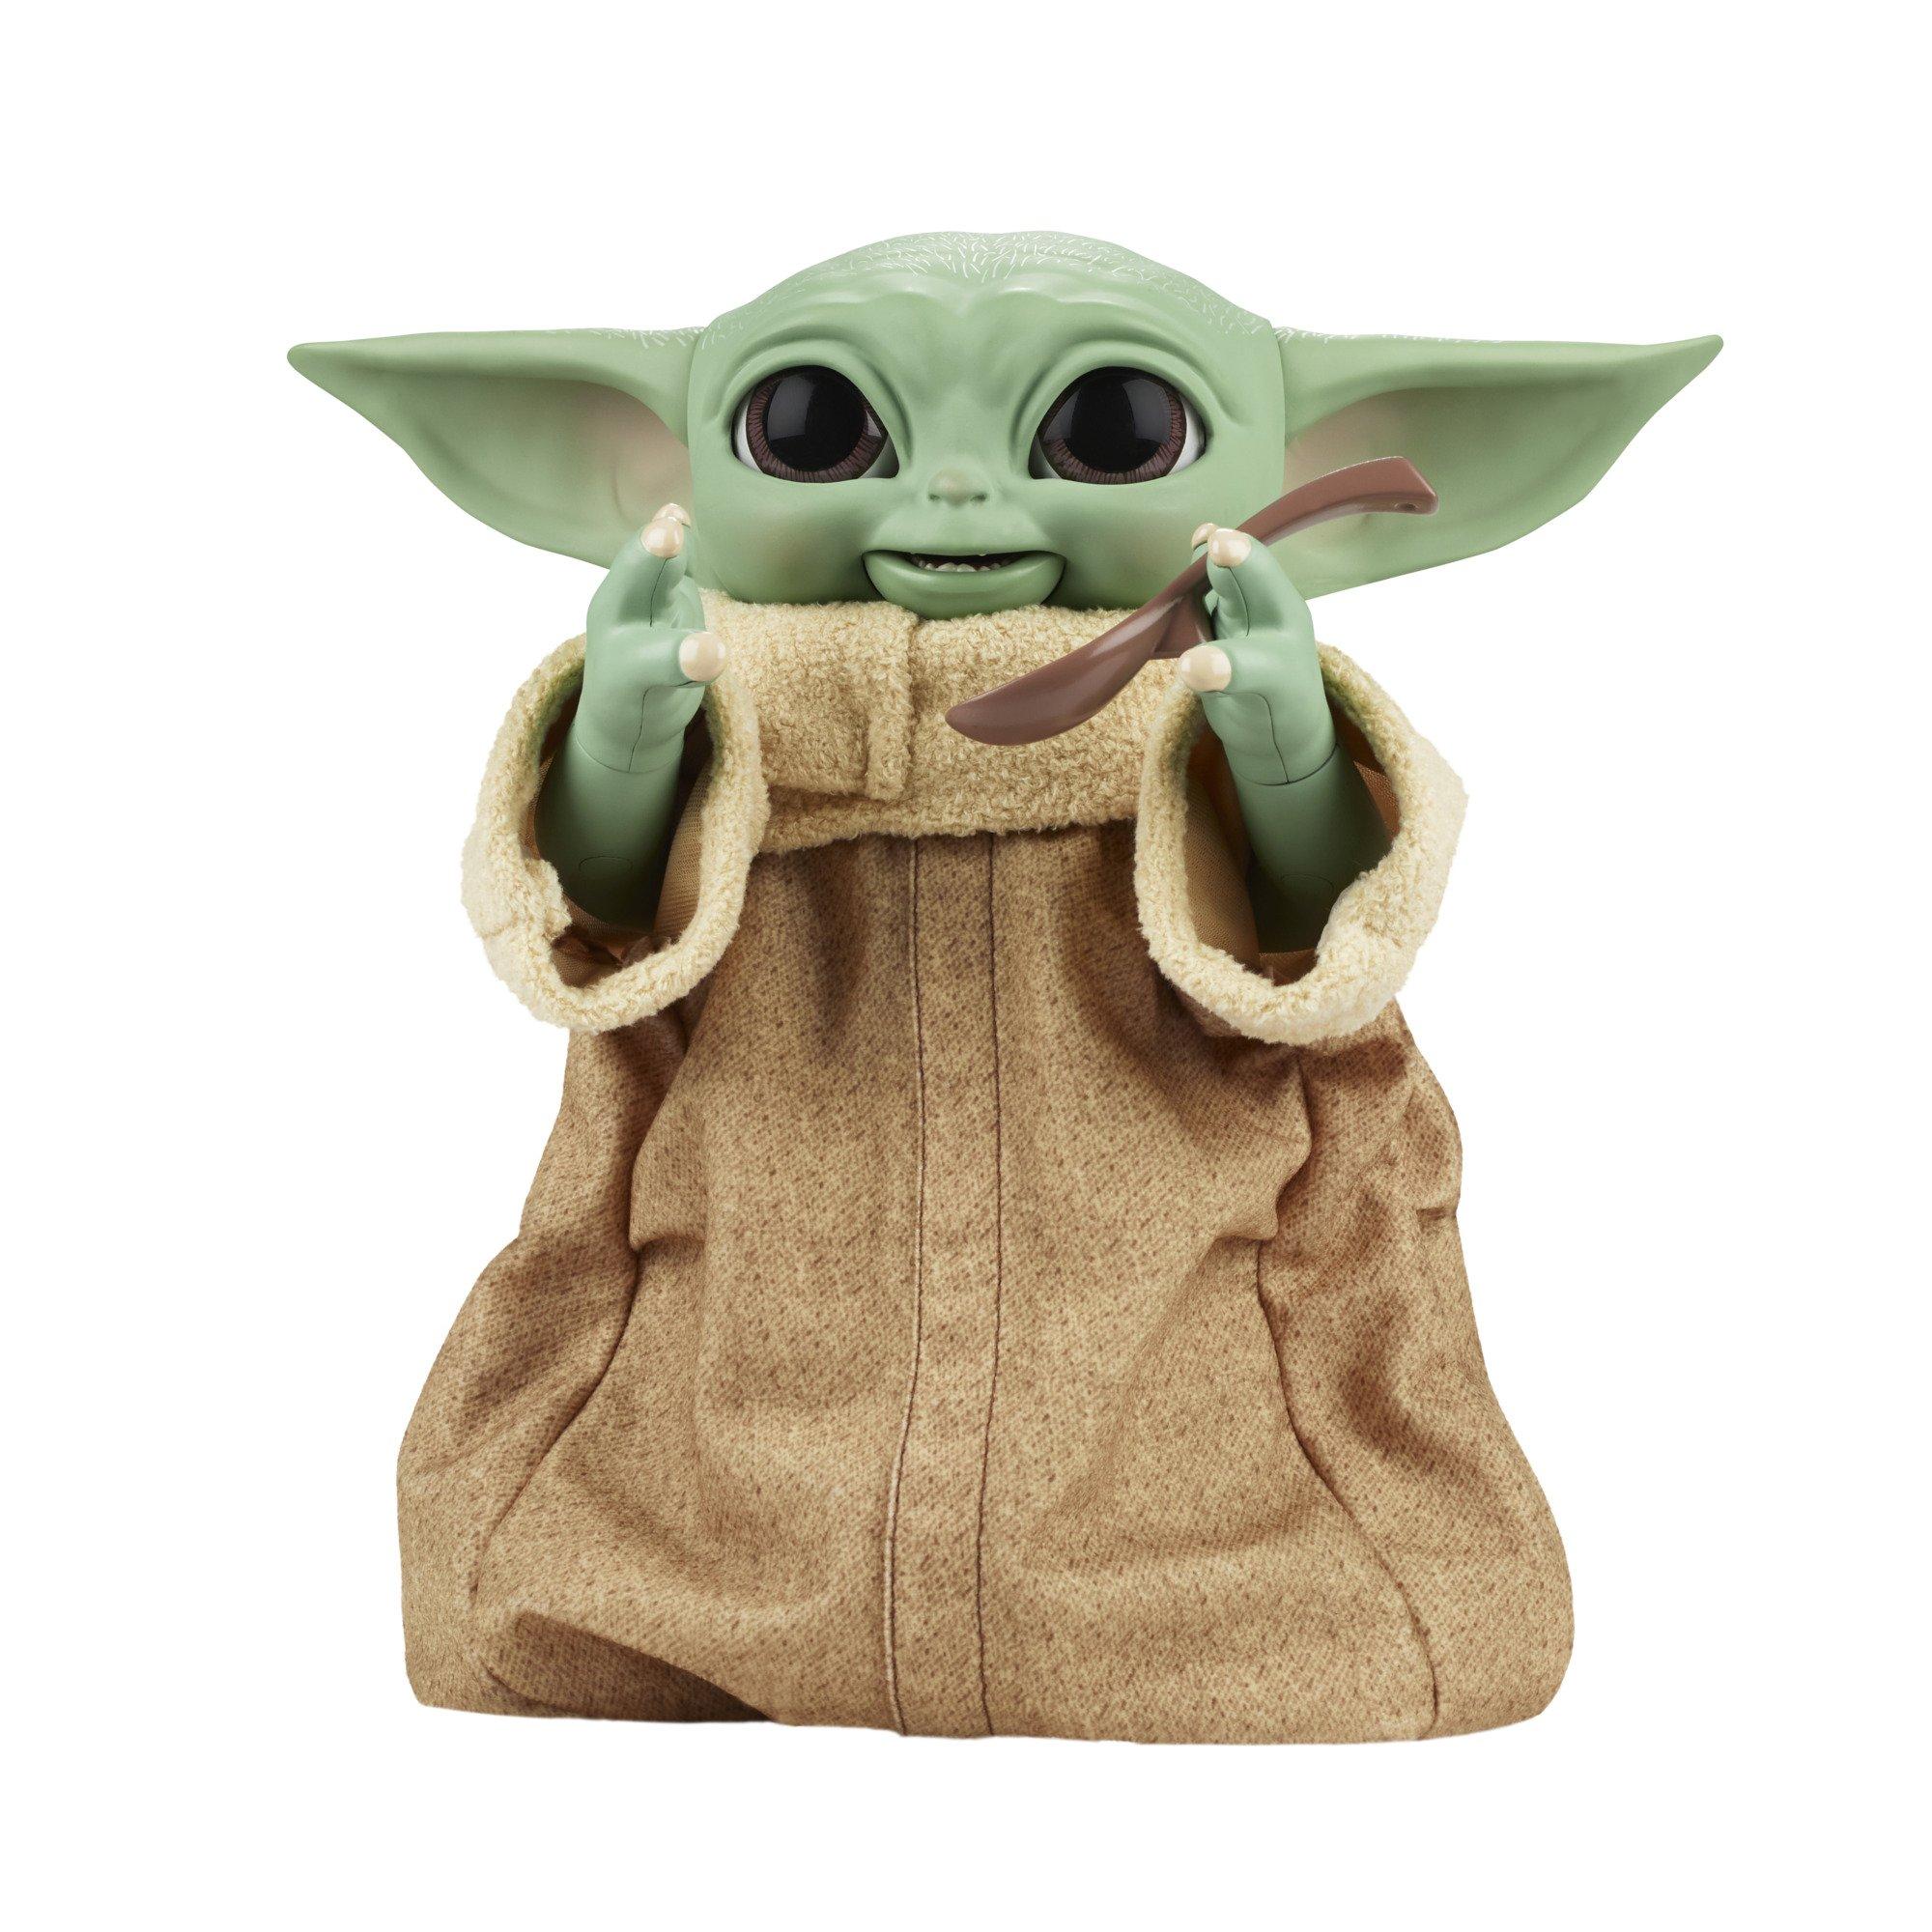 8" Animatronic Figure STAR WARS The Mandalorian The Child Baby Yoda Hasbro 